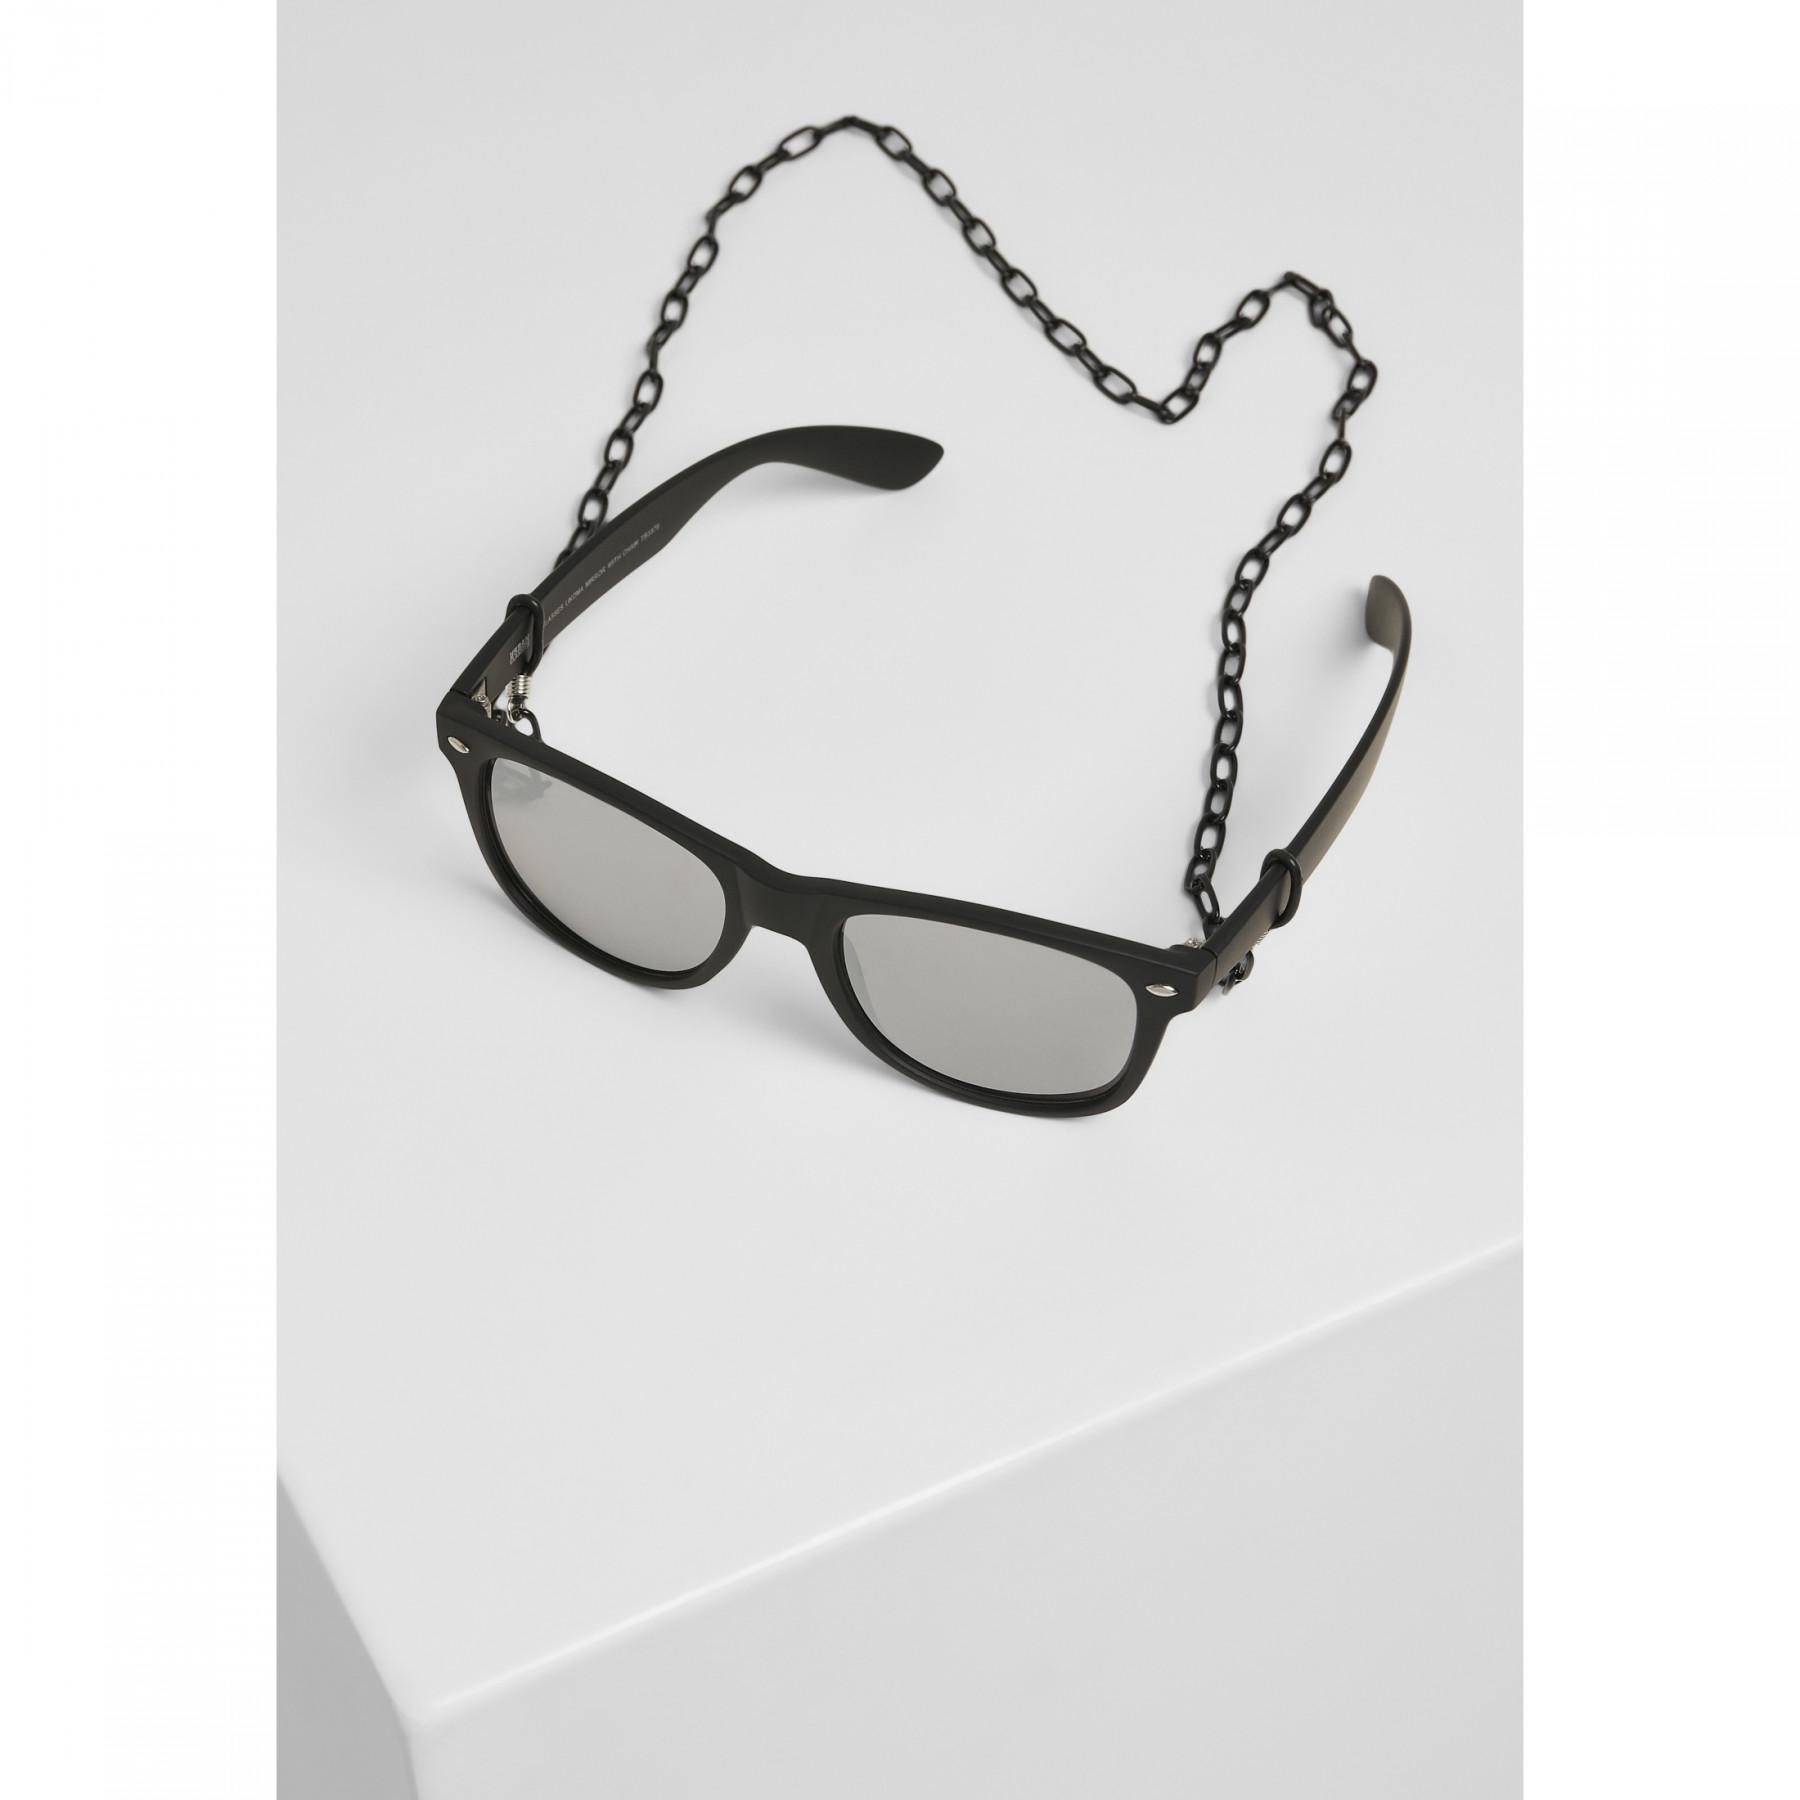 Urban Classic likoma Spiegel-Sonnenbrille